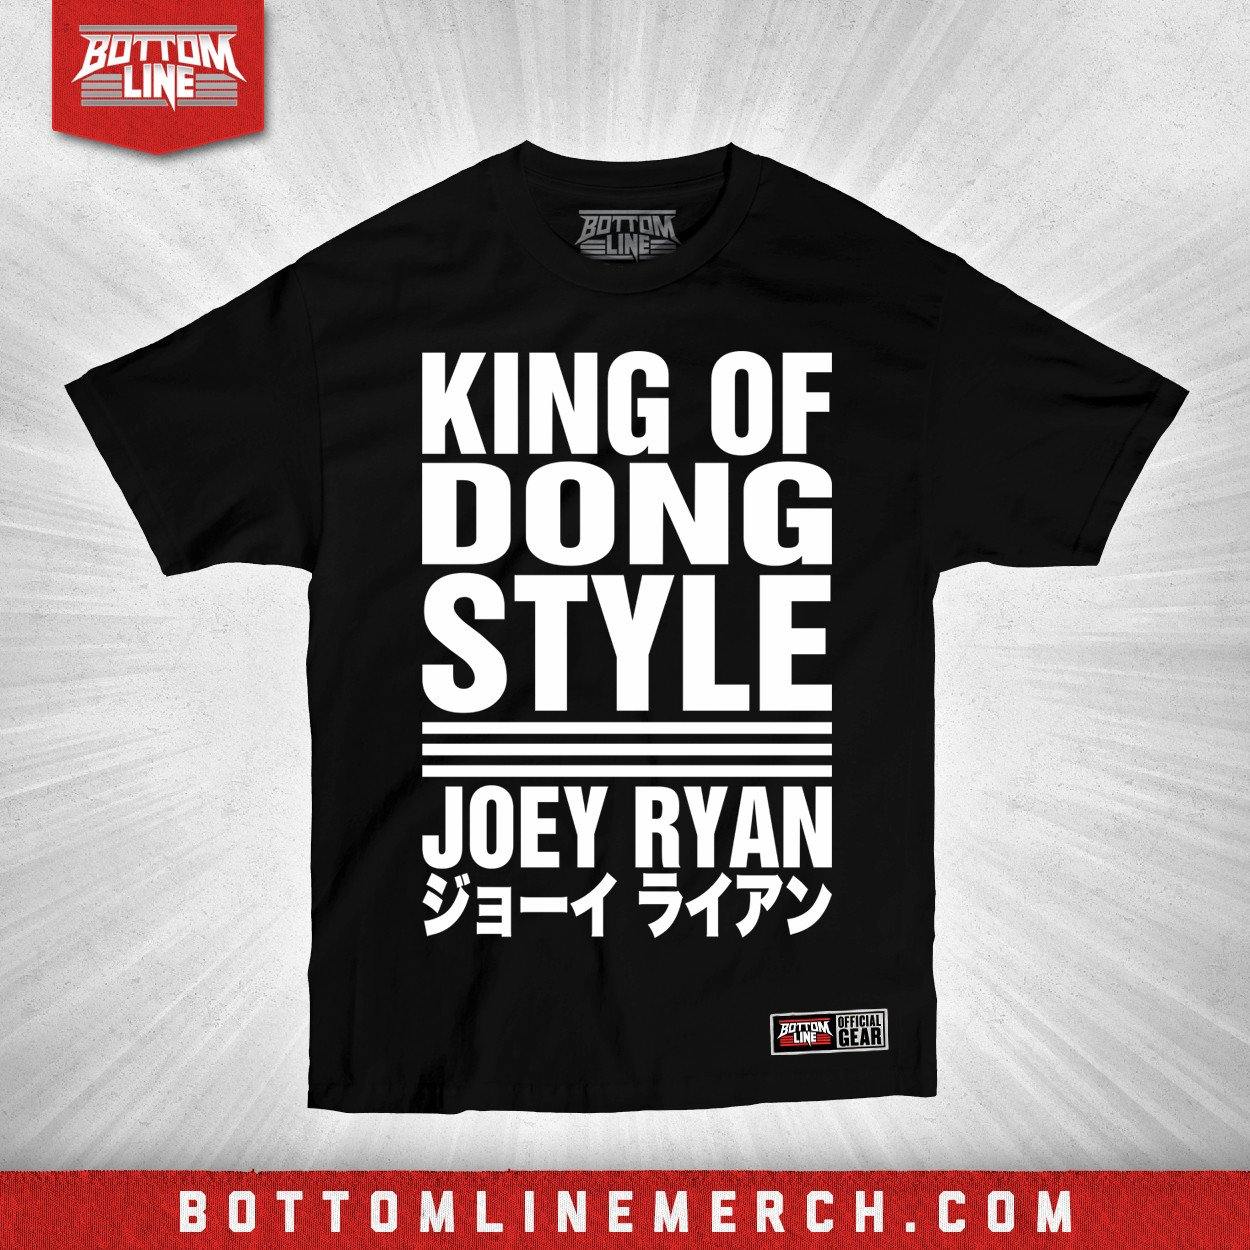 Buy Now – Joey Ryan "King of Dong Style" Shirt – Wrestler & Wrestling Merch – Bottom Line